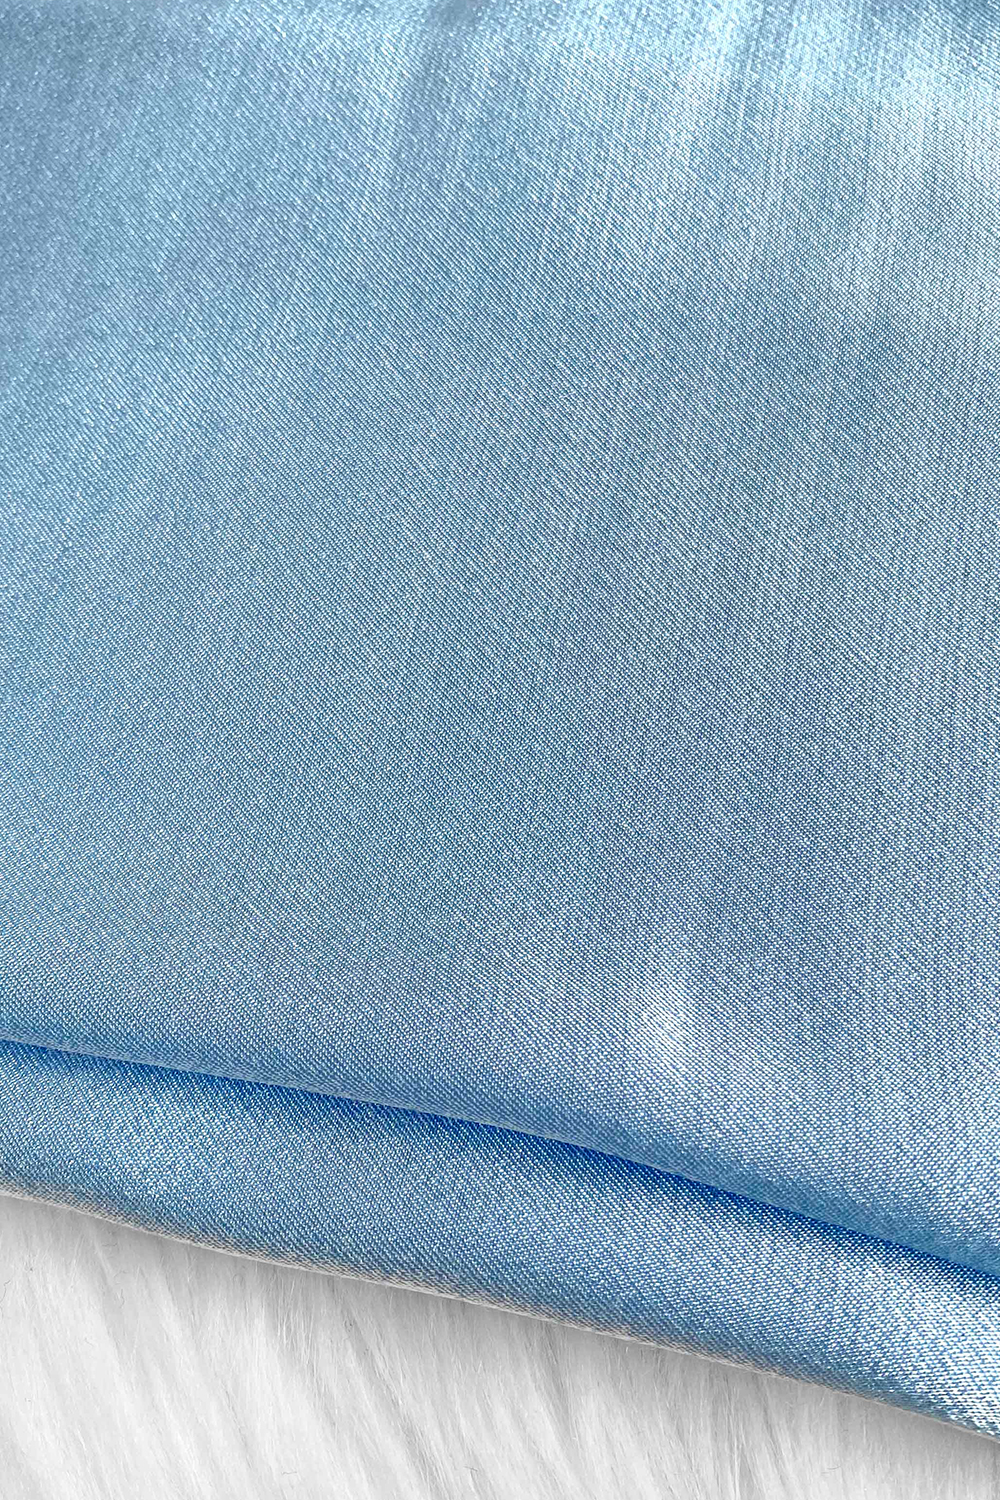 Glossy cotton satin ● light blue silky draping silk feeling pure cotton satin cloth shirt dress Hanfu fabric